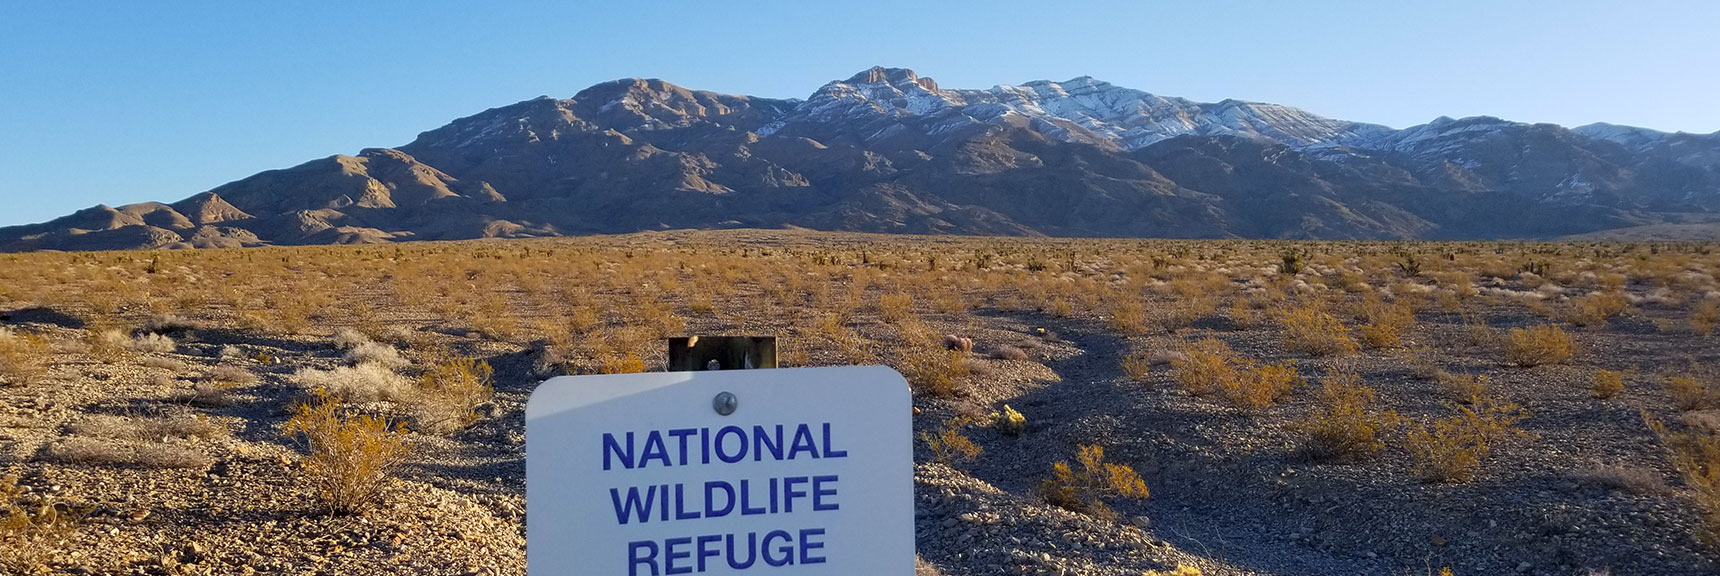 Entering Desert National Wildlife Refuge South of Gass Peak, Nevada